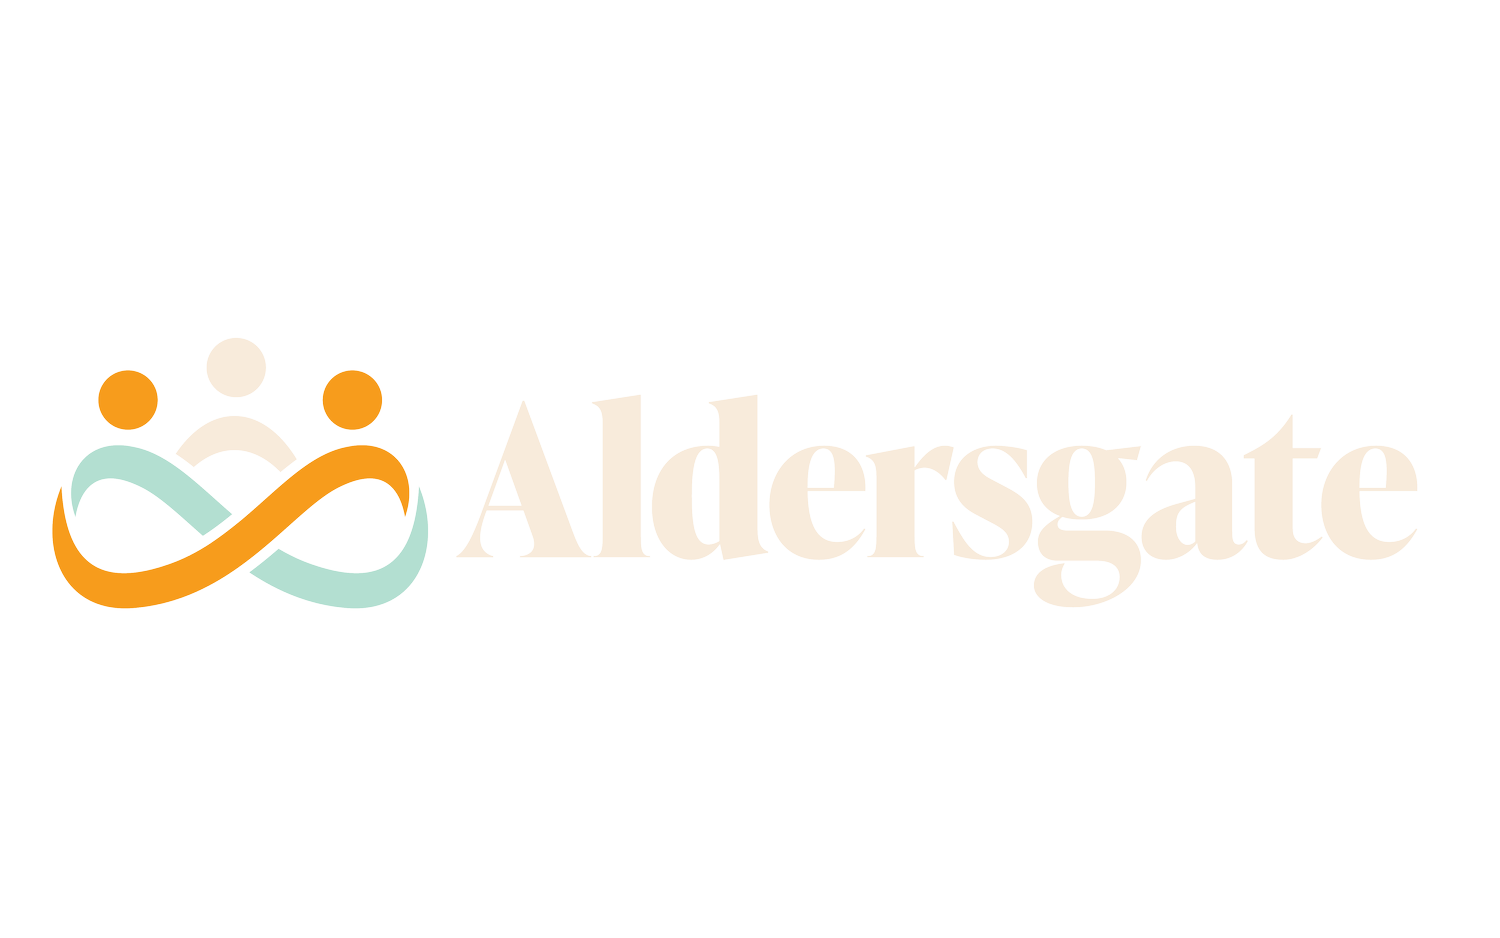 Aldersgate